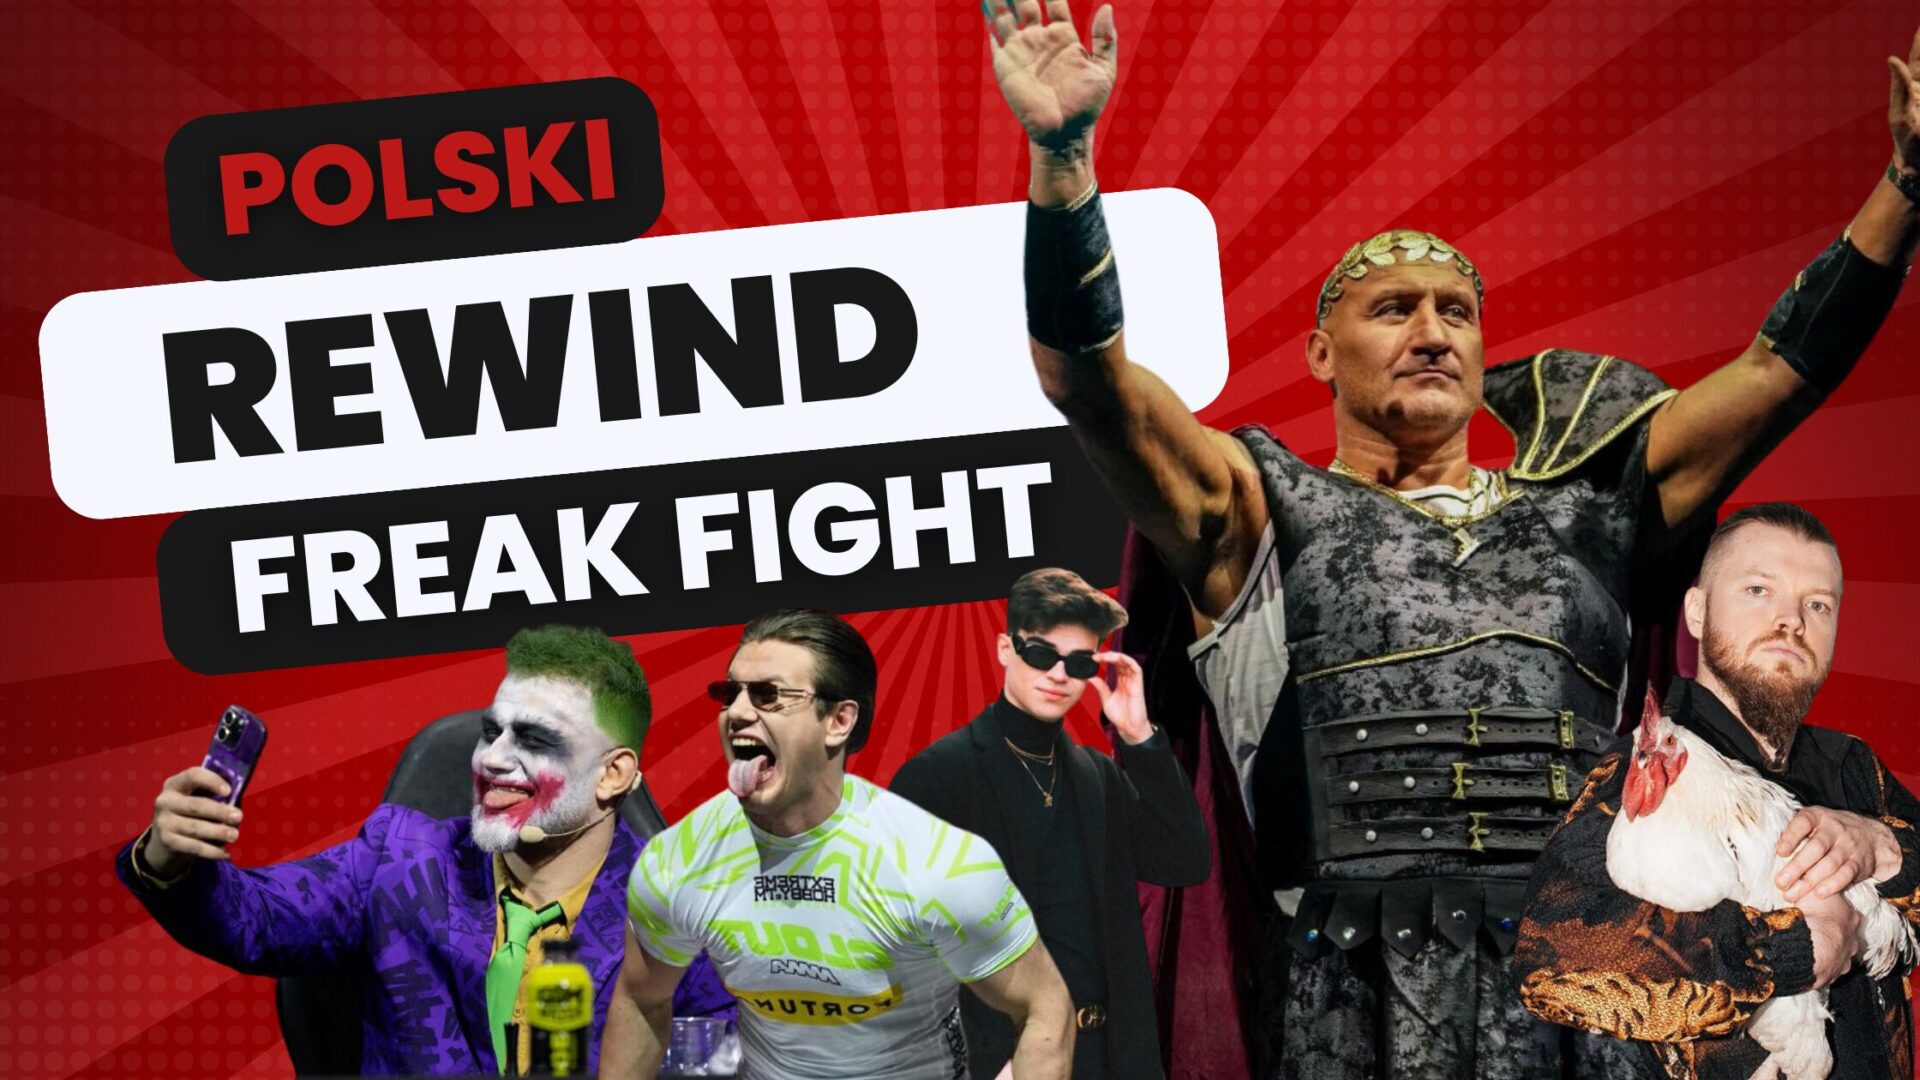 Polski rewind freak fight 2023